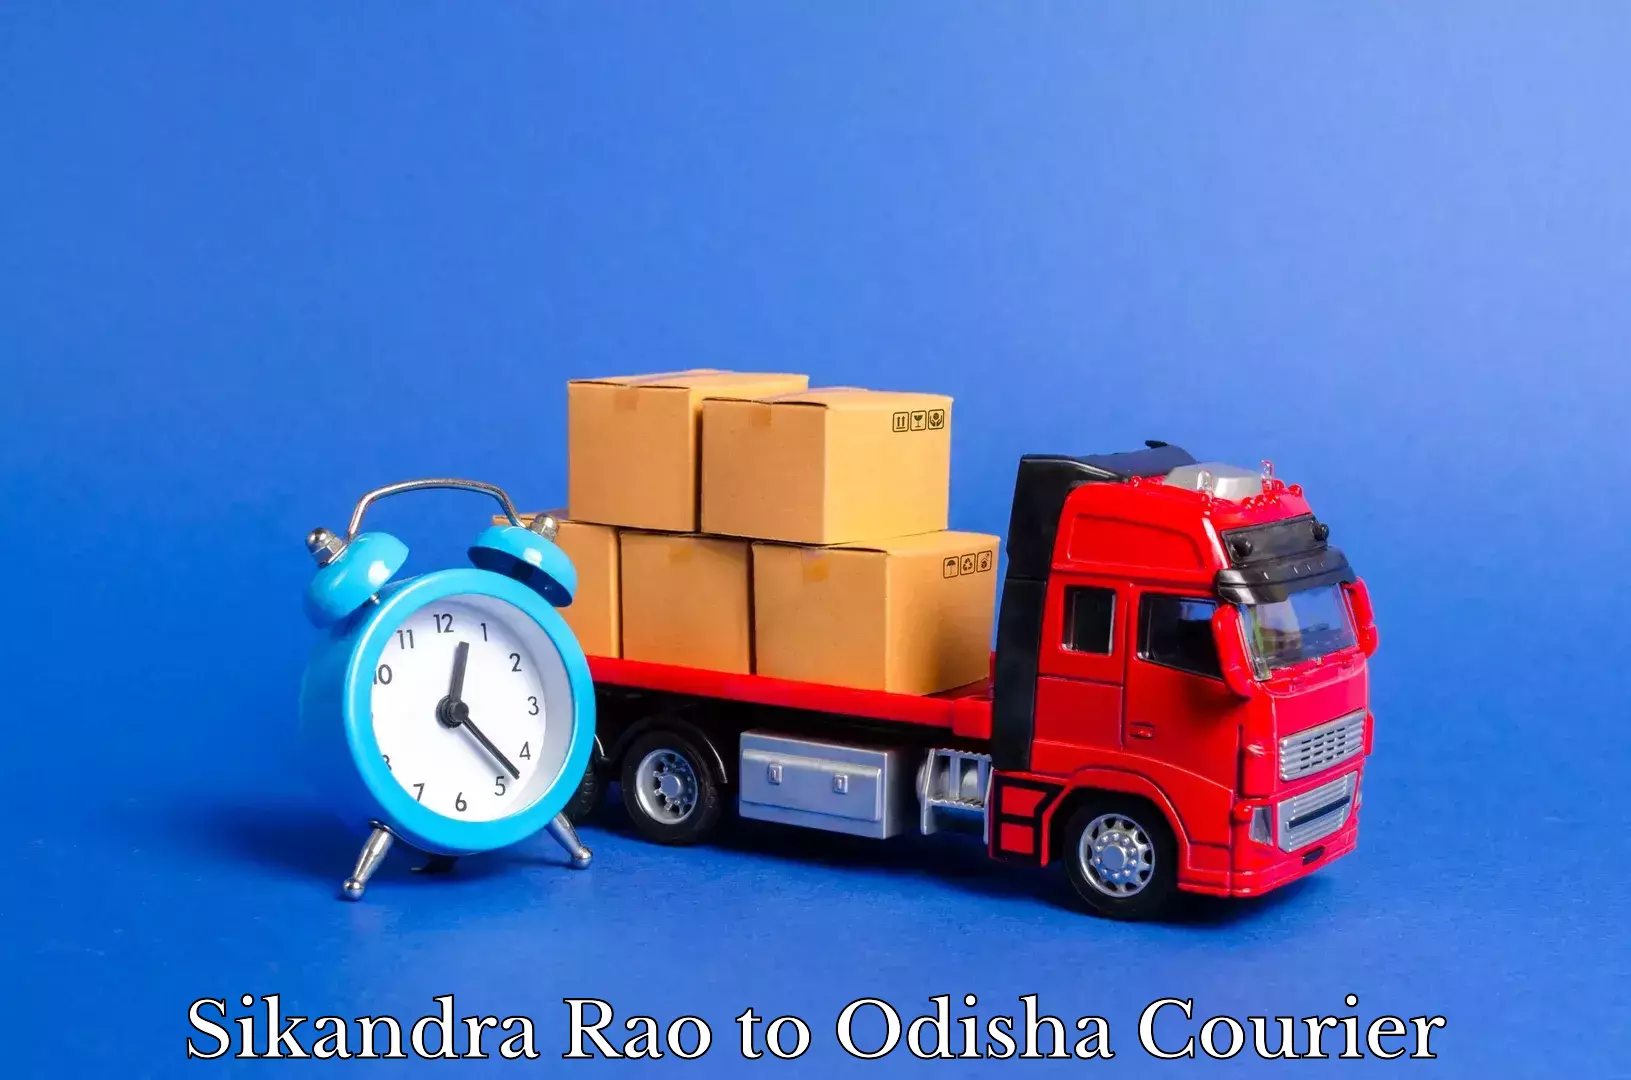 Reliable movers in Sikandra Rao to Odisha